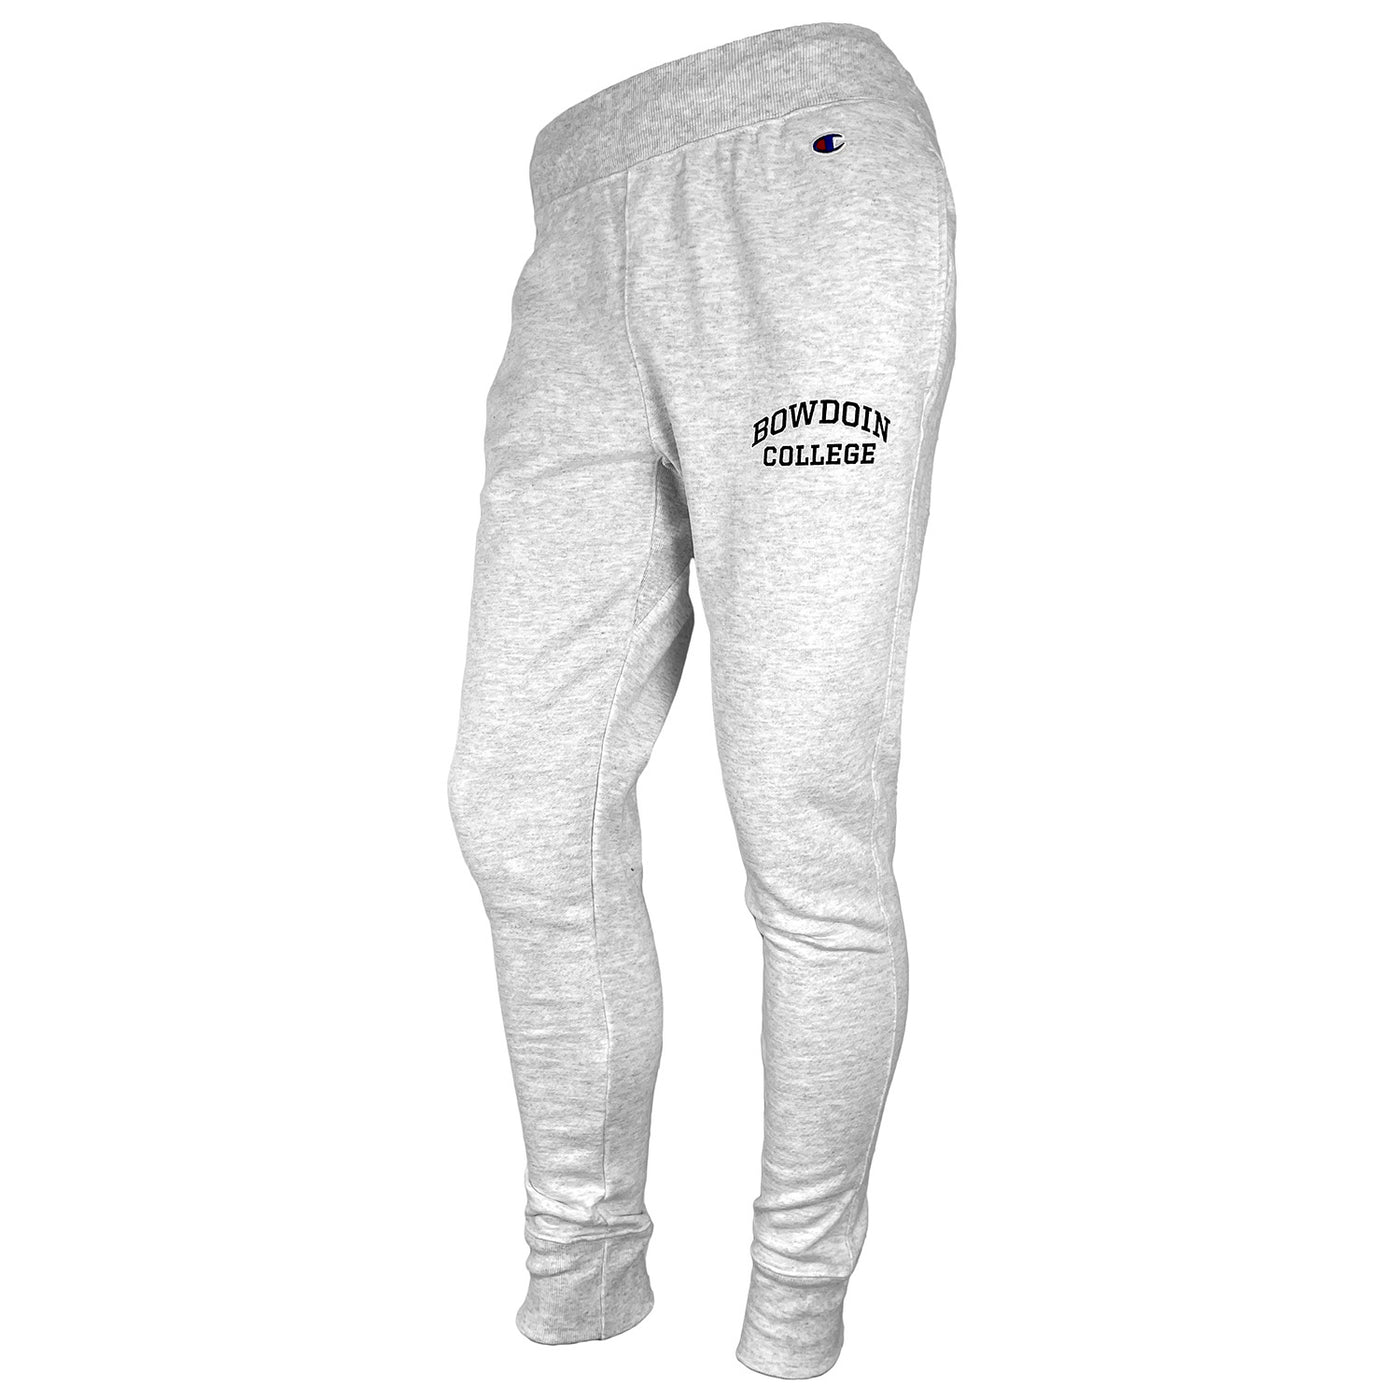 College Cuffed Sweatpants / Jogging Bottoms